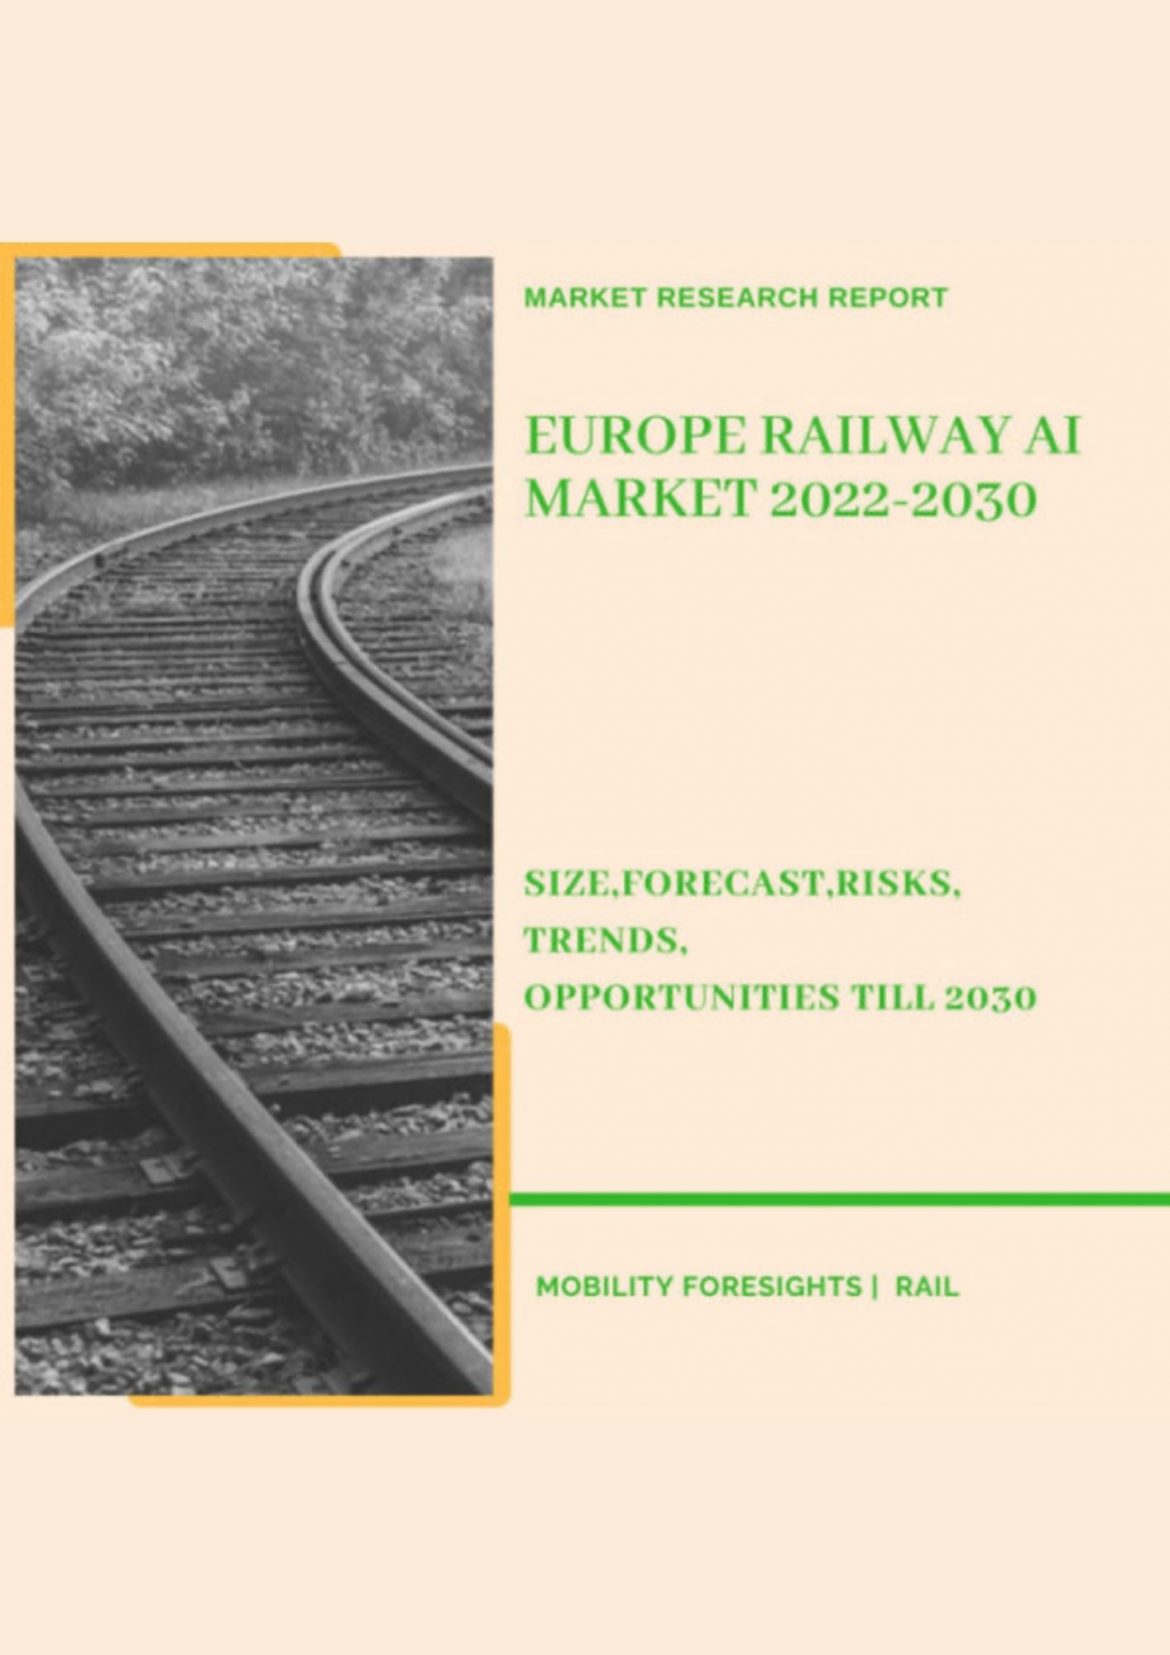 Europe Railway AI Market 2022-2030